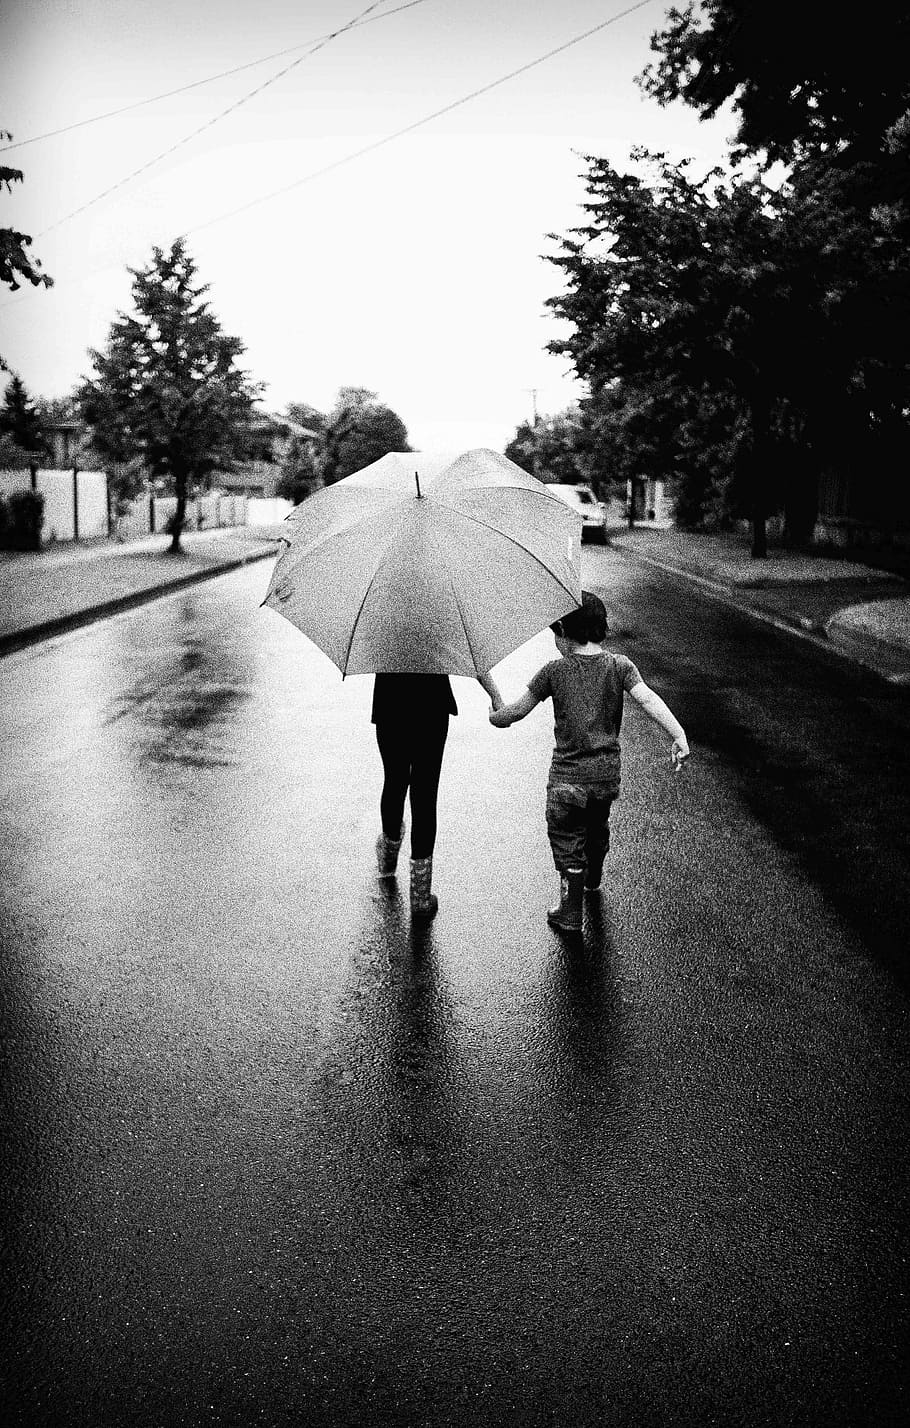 Umbrella, Walking, Outdoor, rain, young, pouring, fun, black and white, street, neighborhood